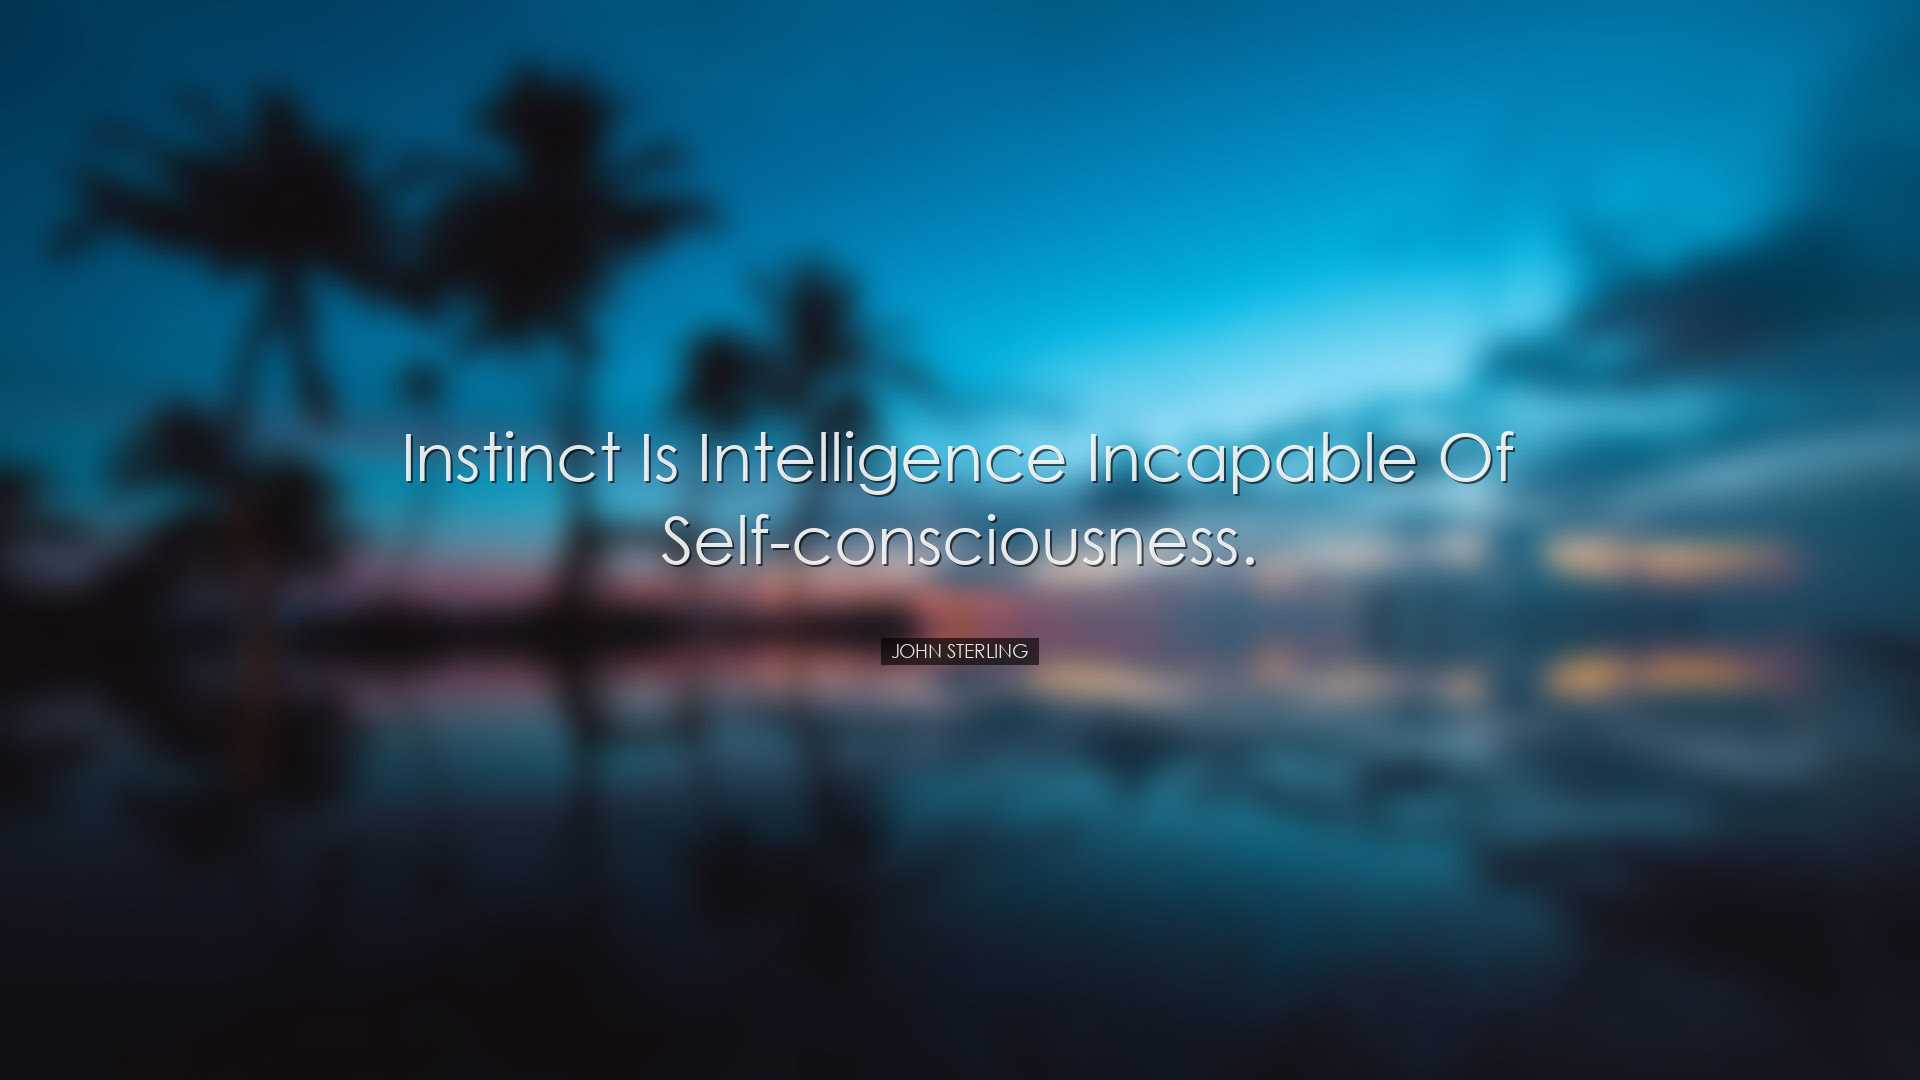 Instinct is intelligence incapable of self-consciousness. - John S